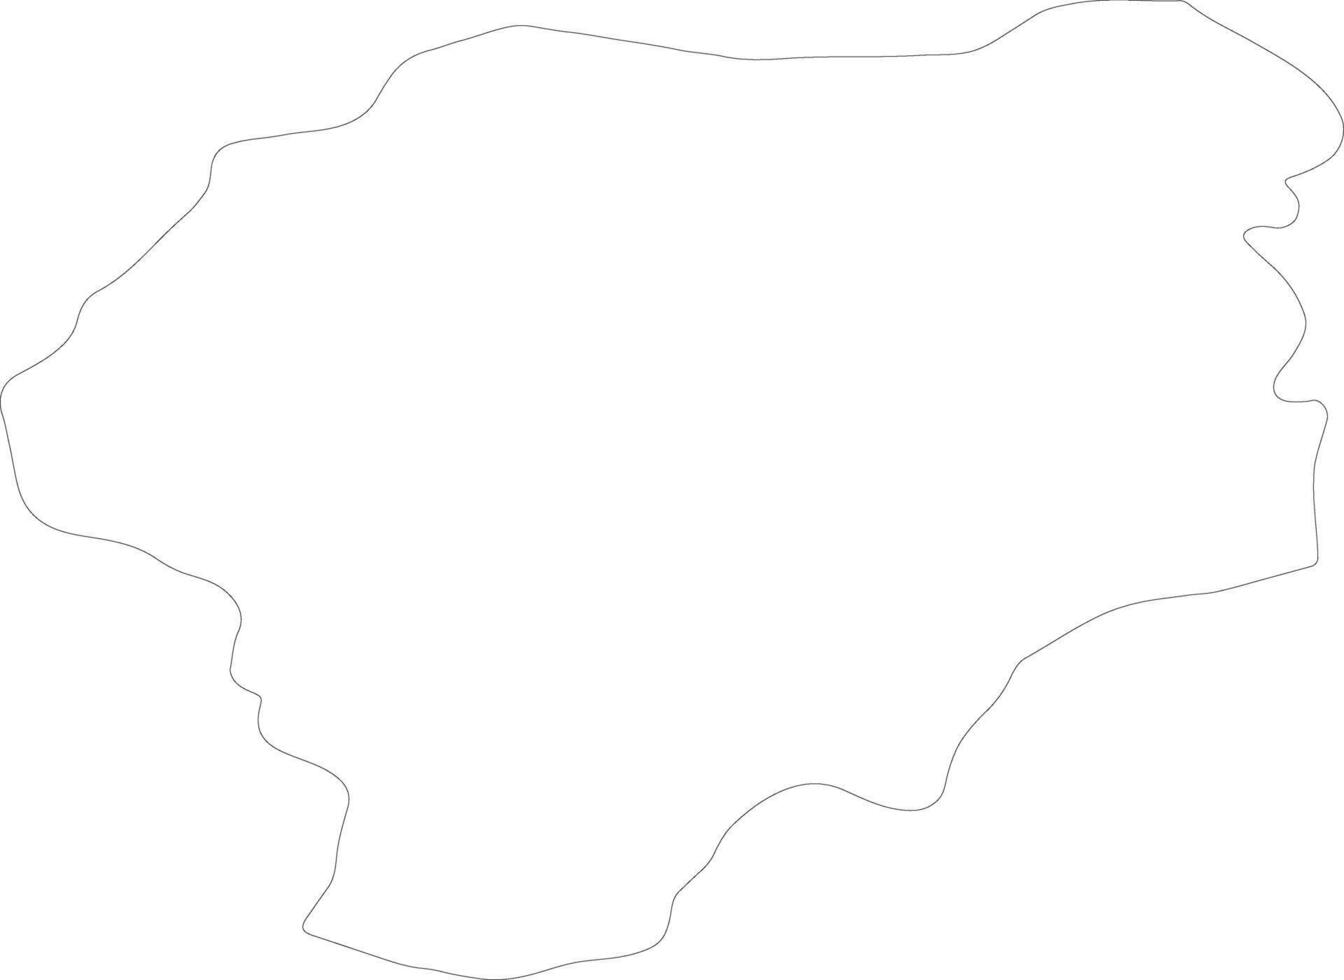 bistrita-nasaud romênia esboço mapa vetor